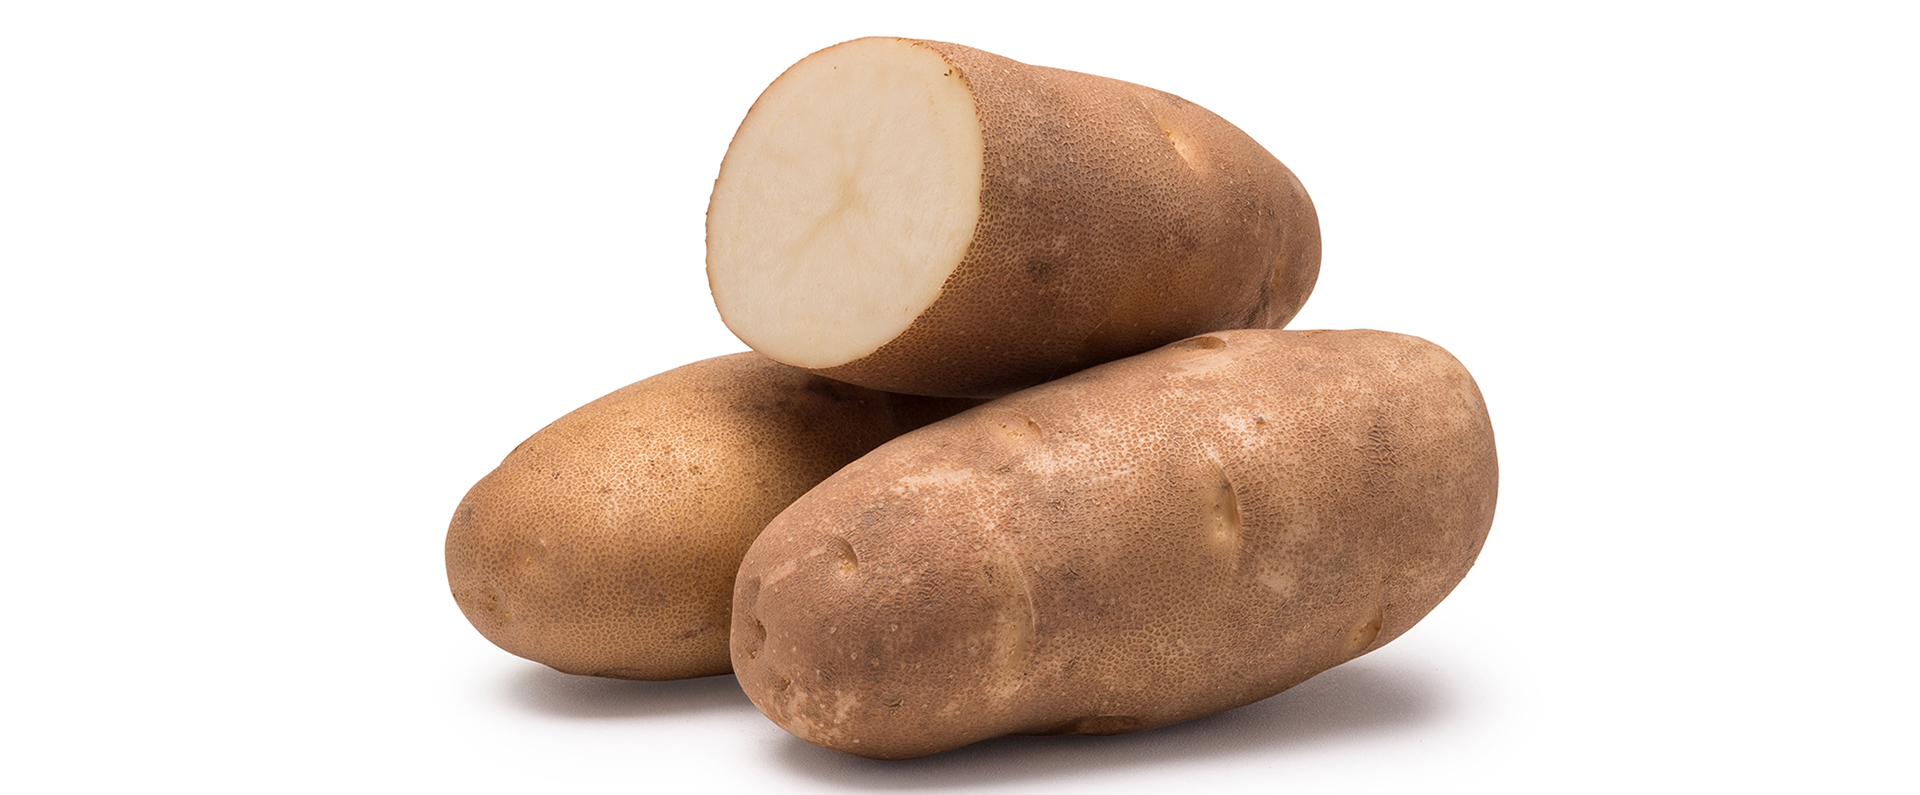 Galena Russet potatoes. 